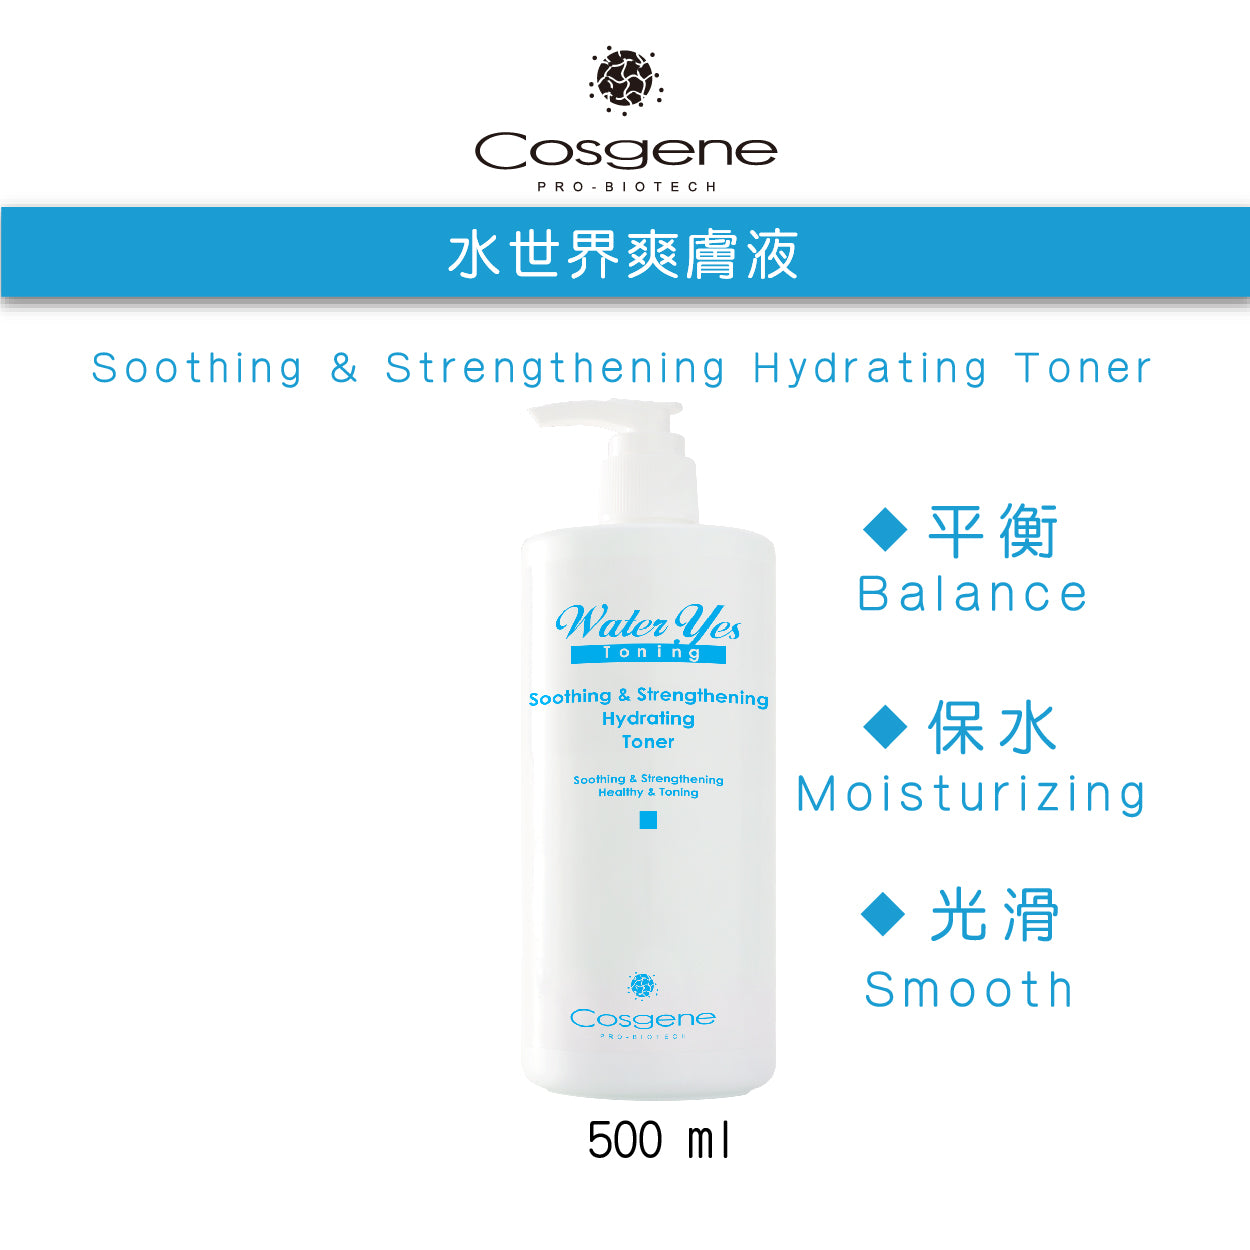 【COSGENE】Water World Soothing & Strengthening Hydrating Toner